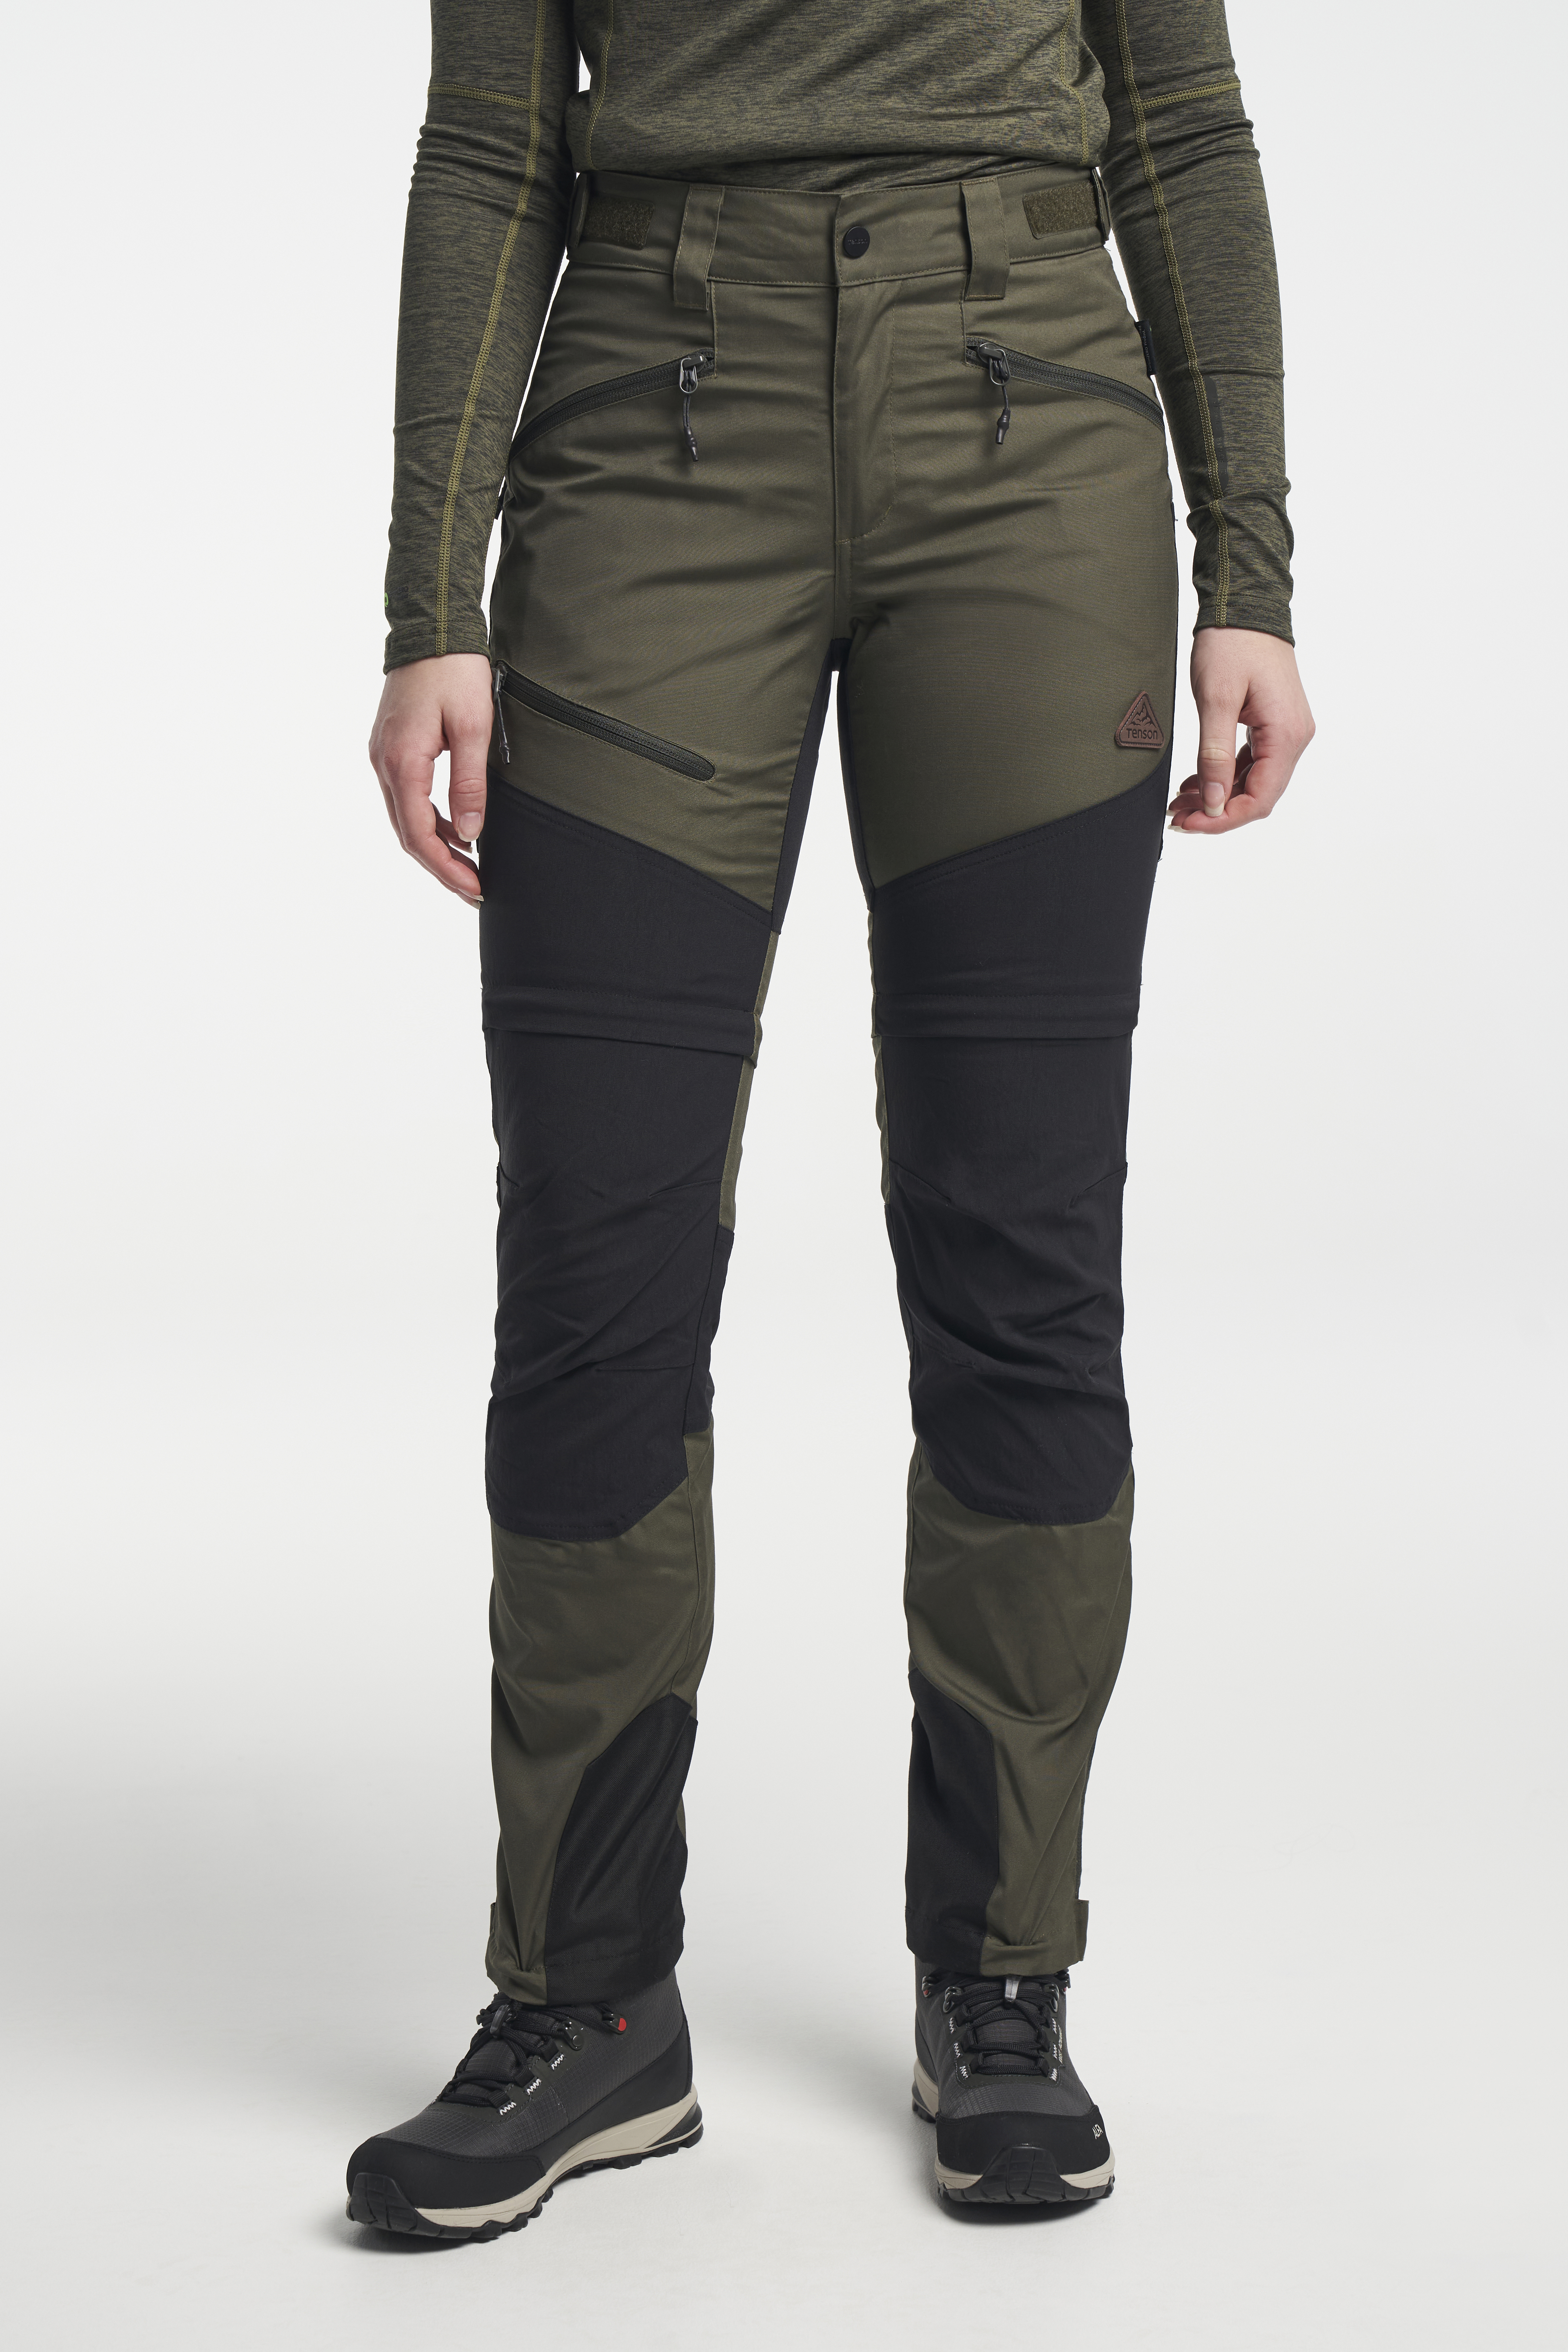 Buy Women's Water Repellent Strech Hiking Trousers Sh500 X Online |  Decathlon